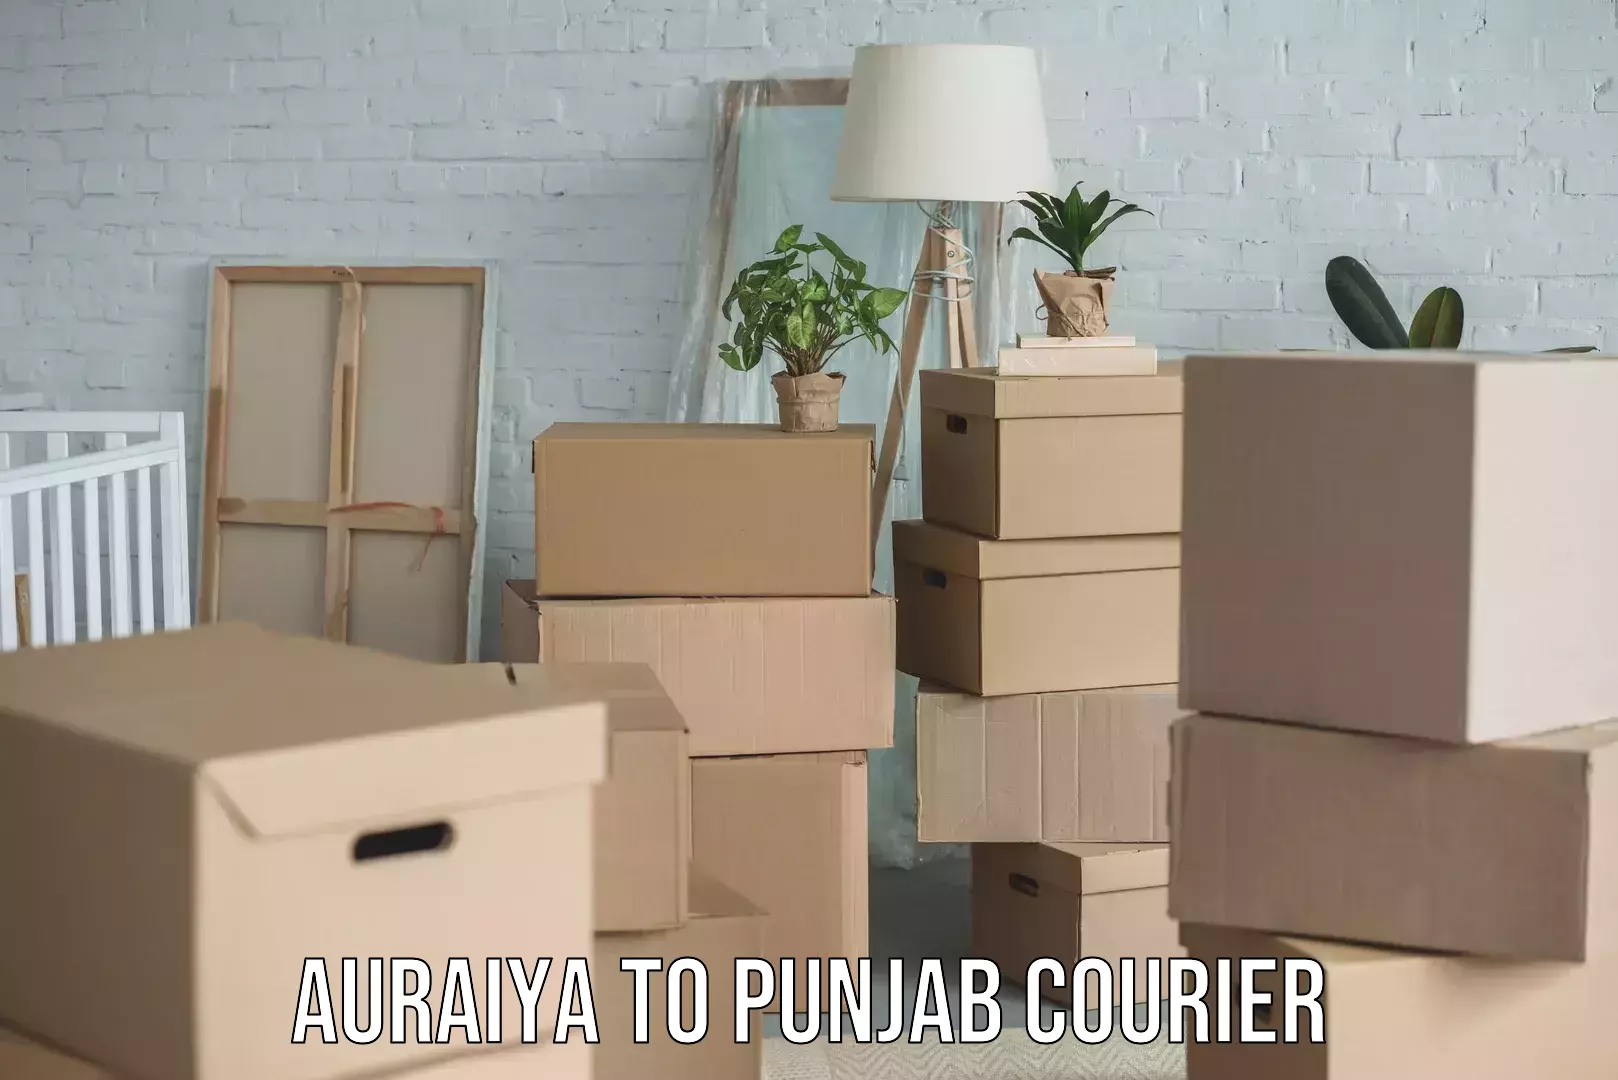 Courier service partnerships Auraiya to Punjab